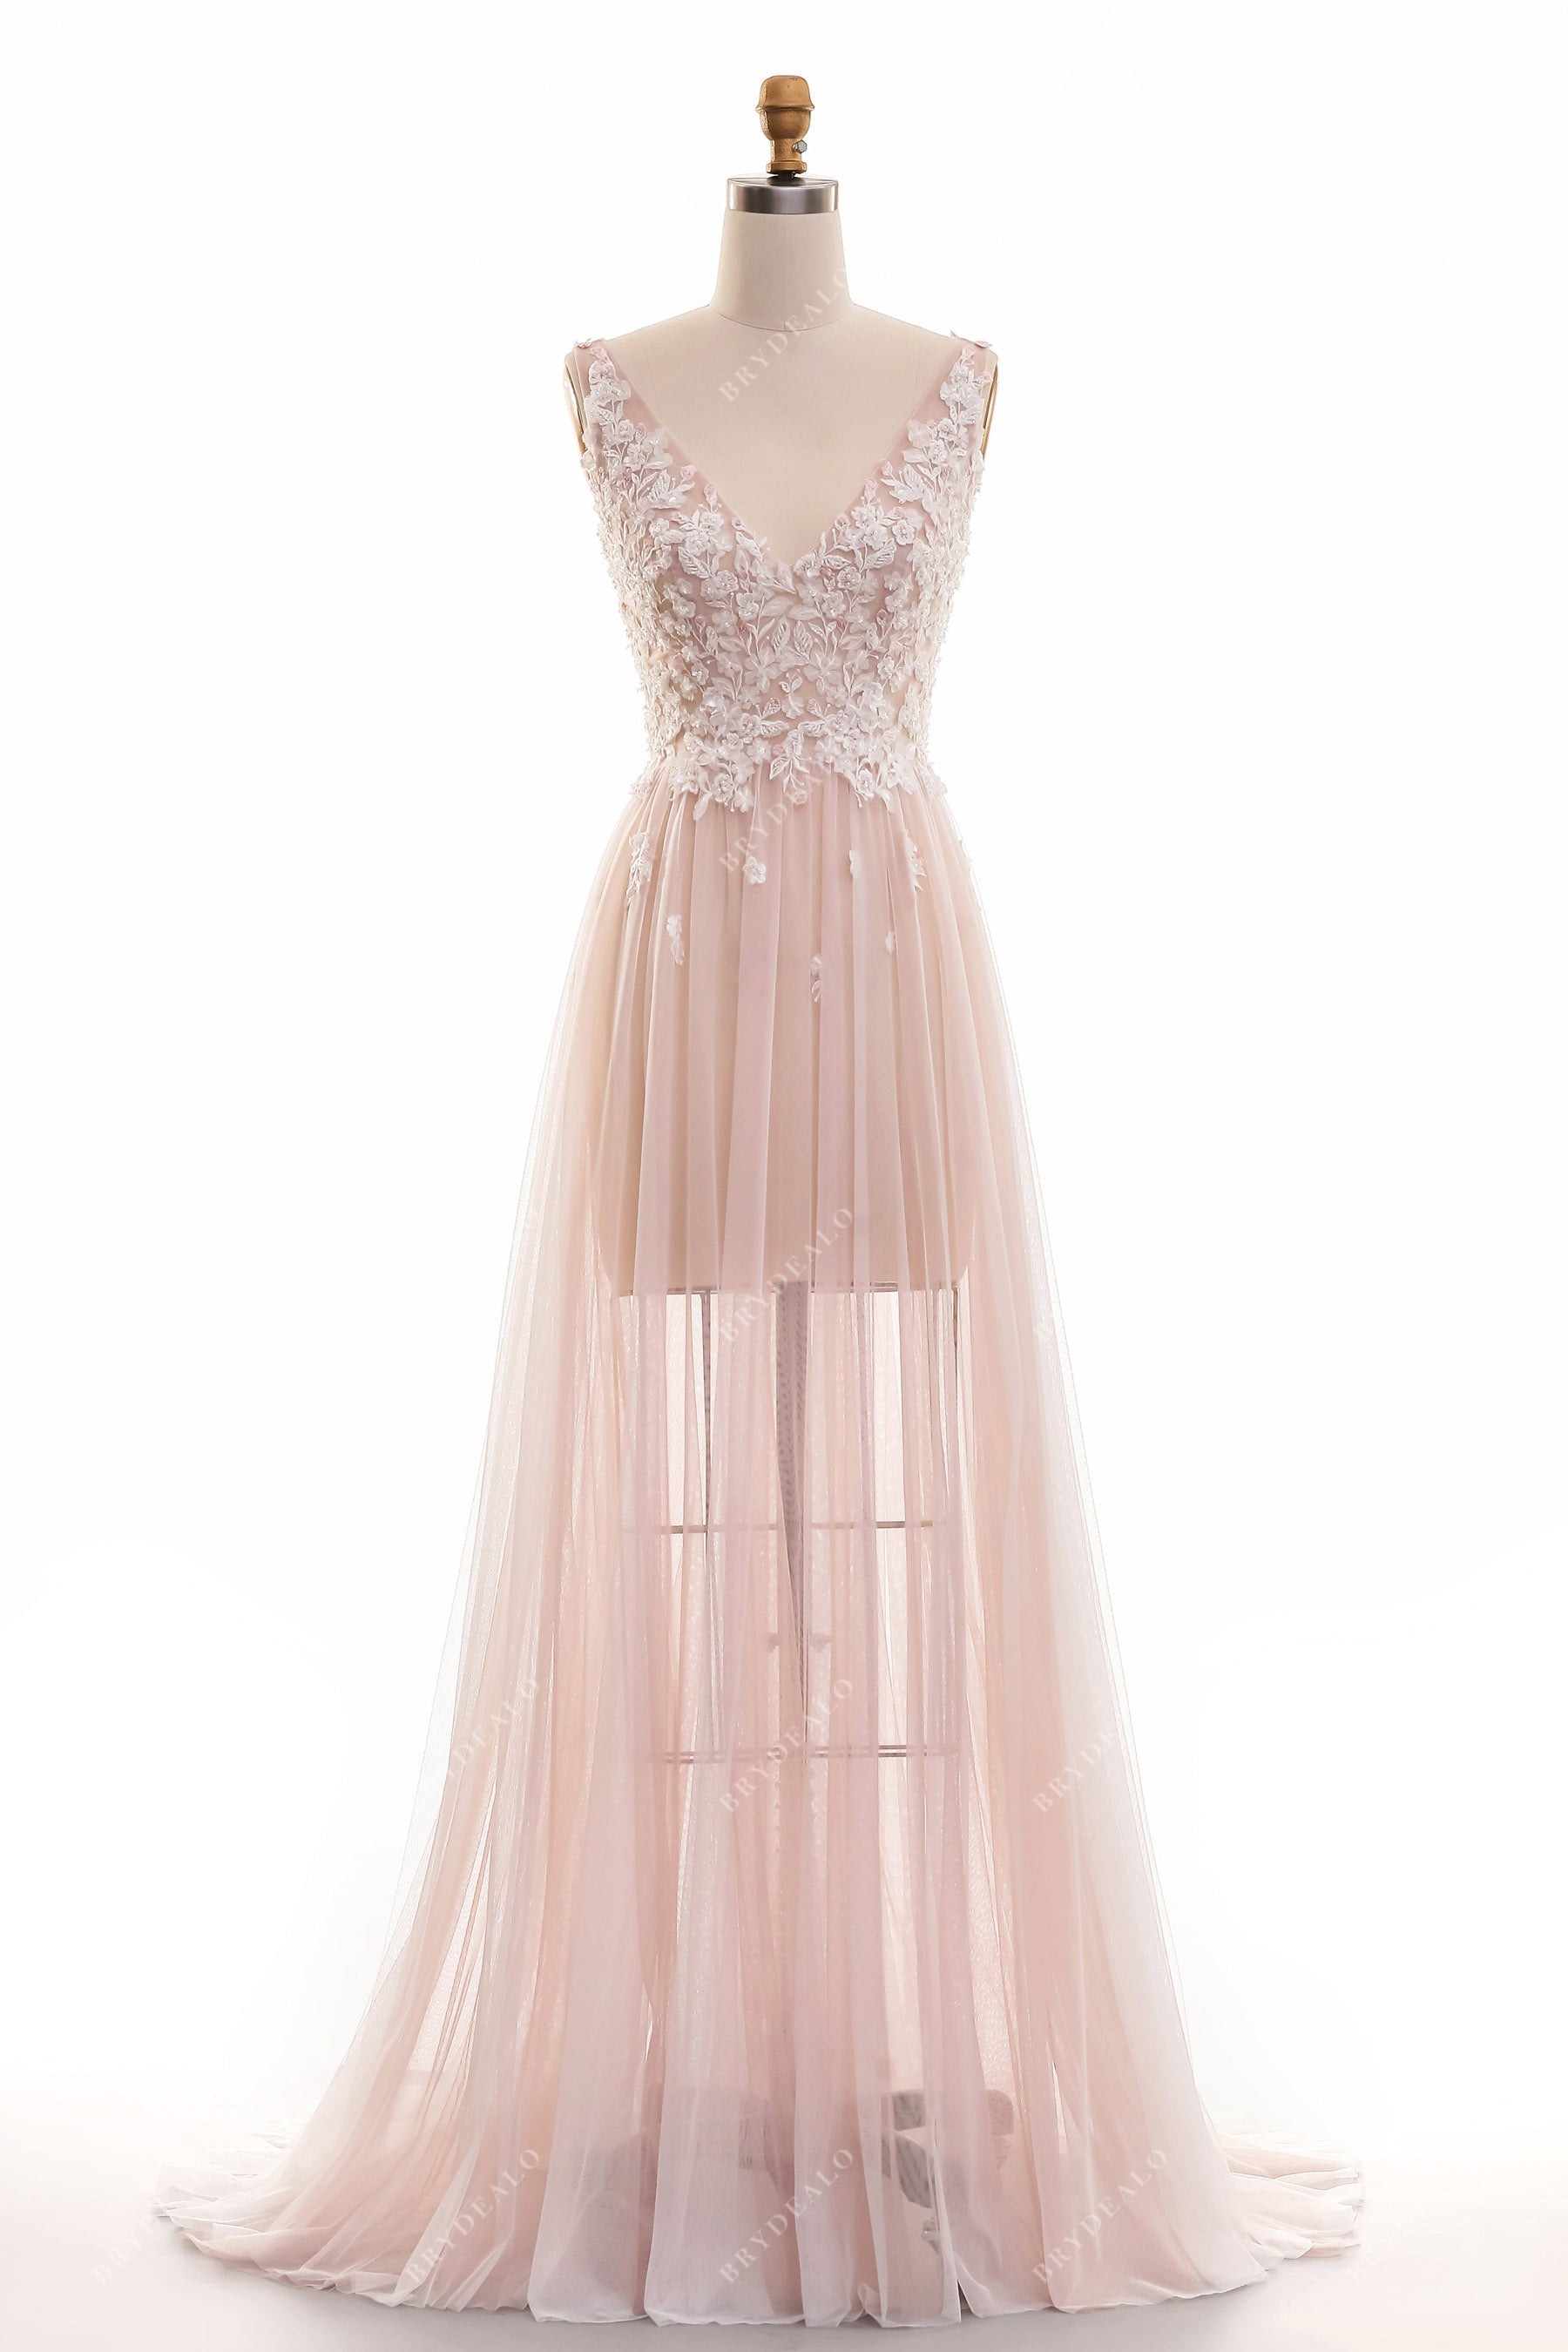 Boho Dusty Rose Lace Tulle A-line Wedding Dress